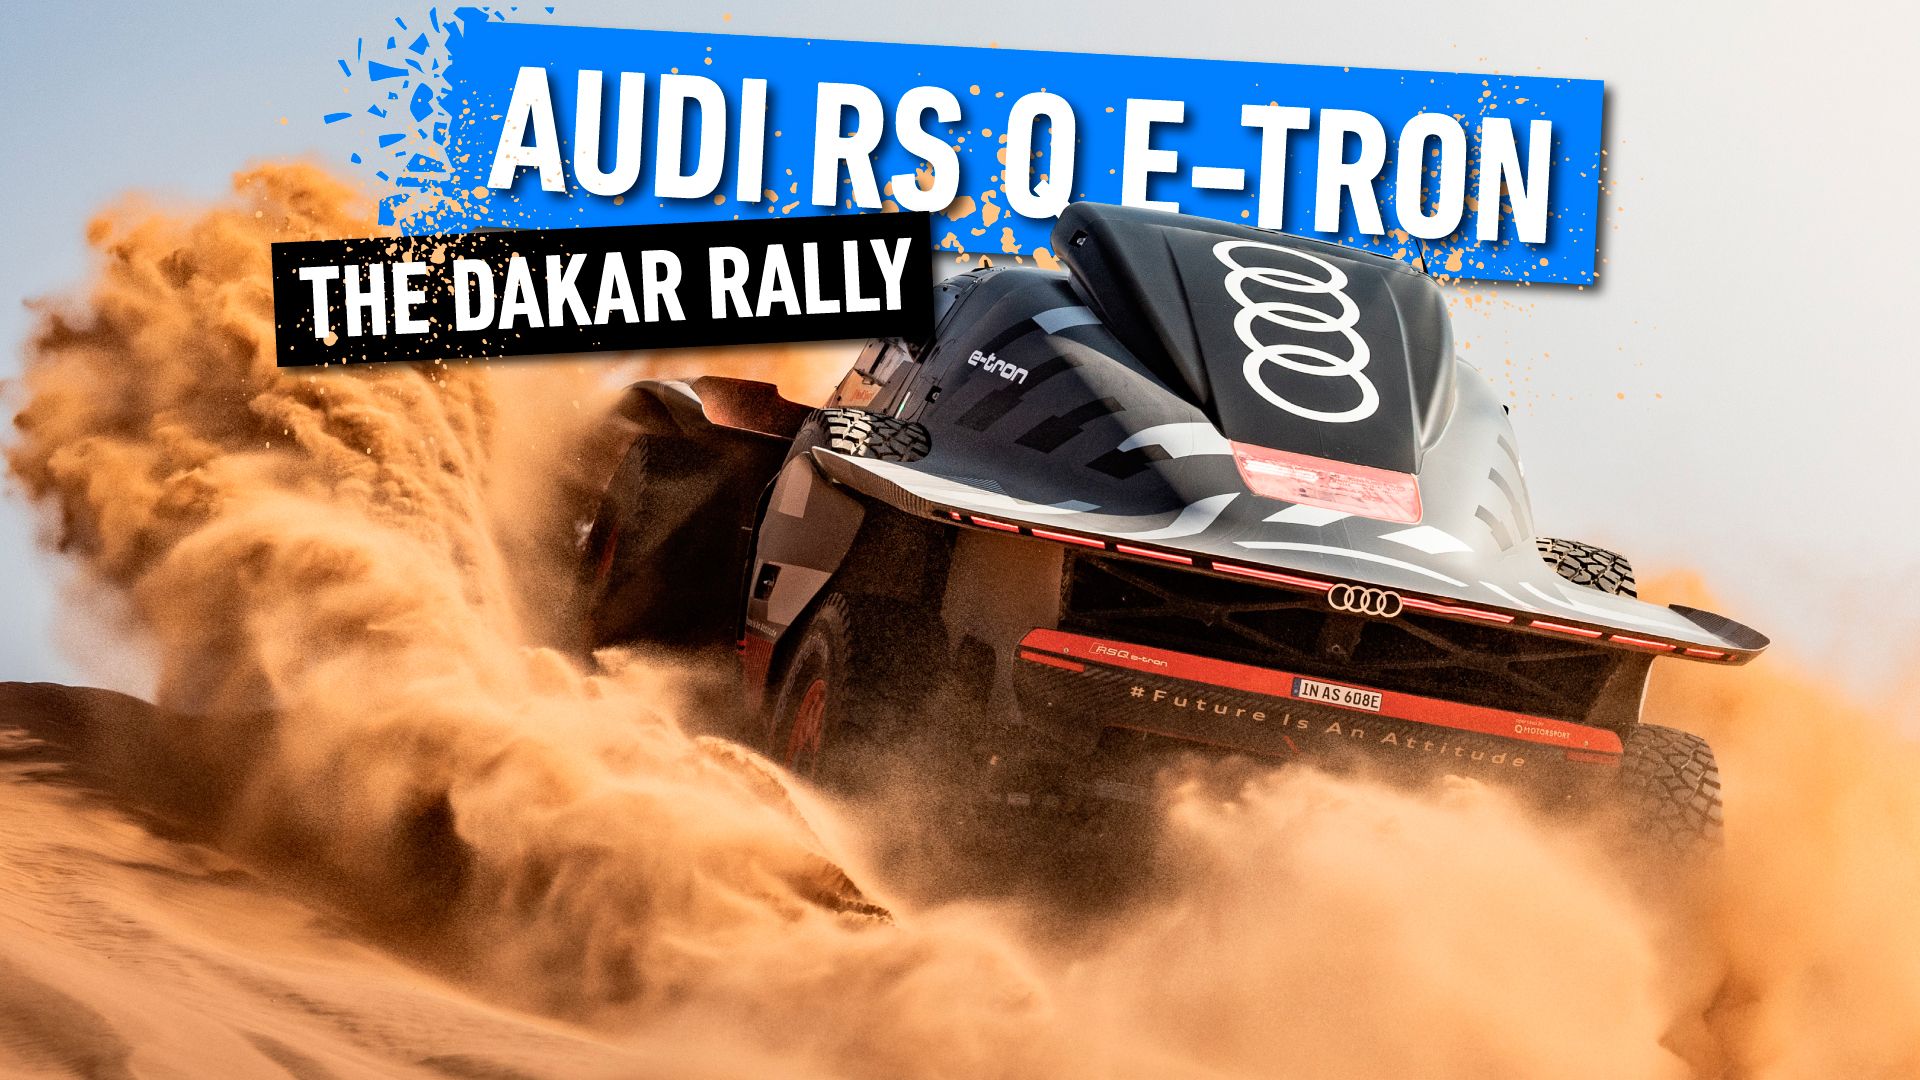 The-Dakar-Rally-and-the-Audi-RS-Q-e-tron